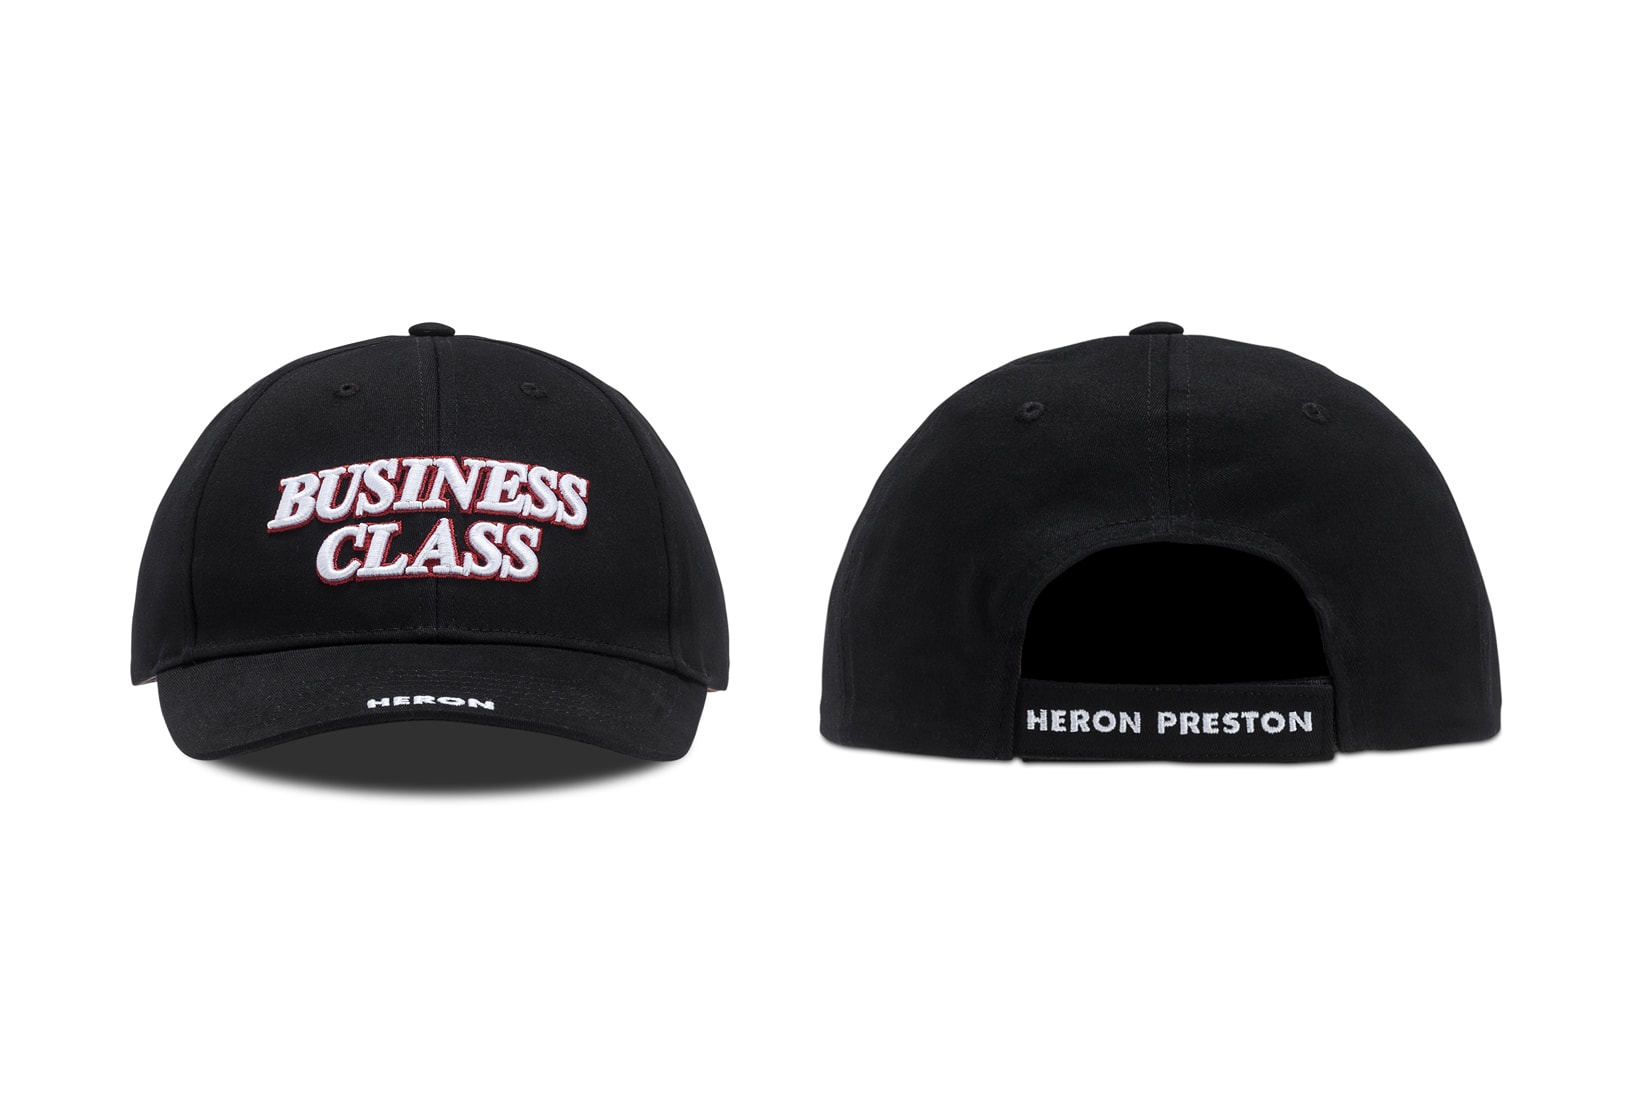 Heron Preston Business Class Hat Black Red White